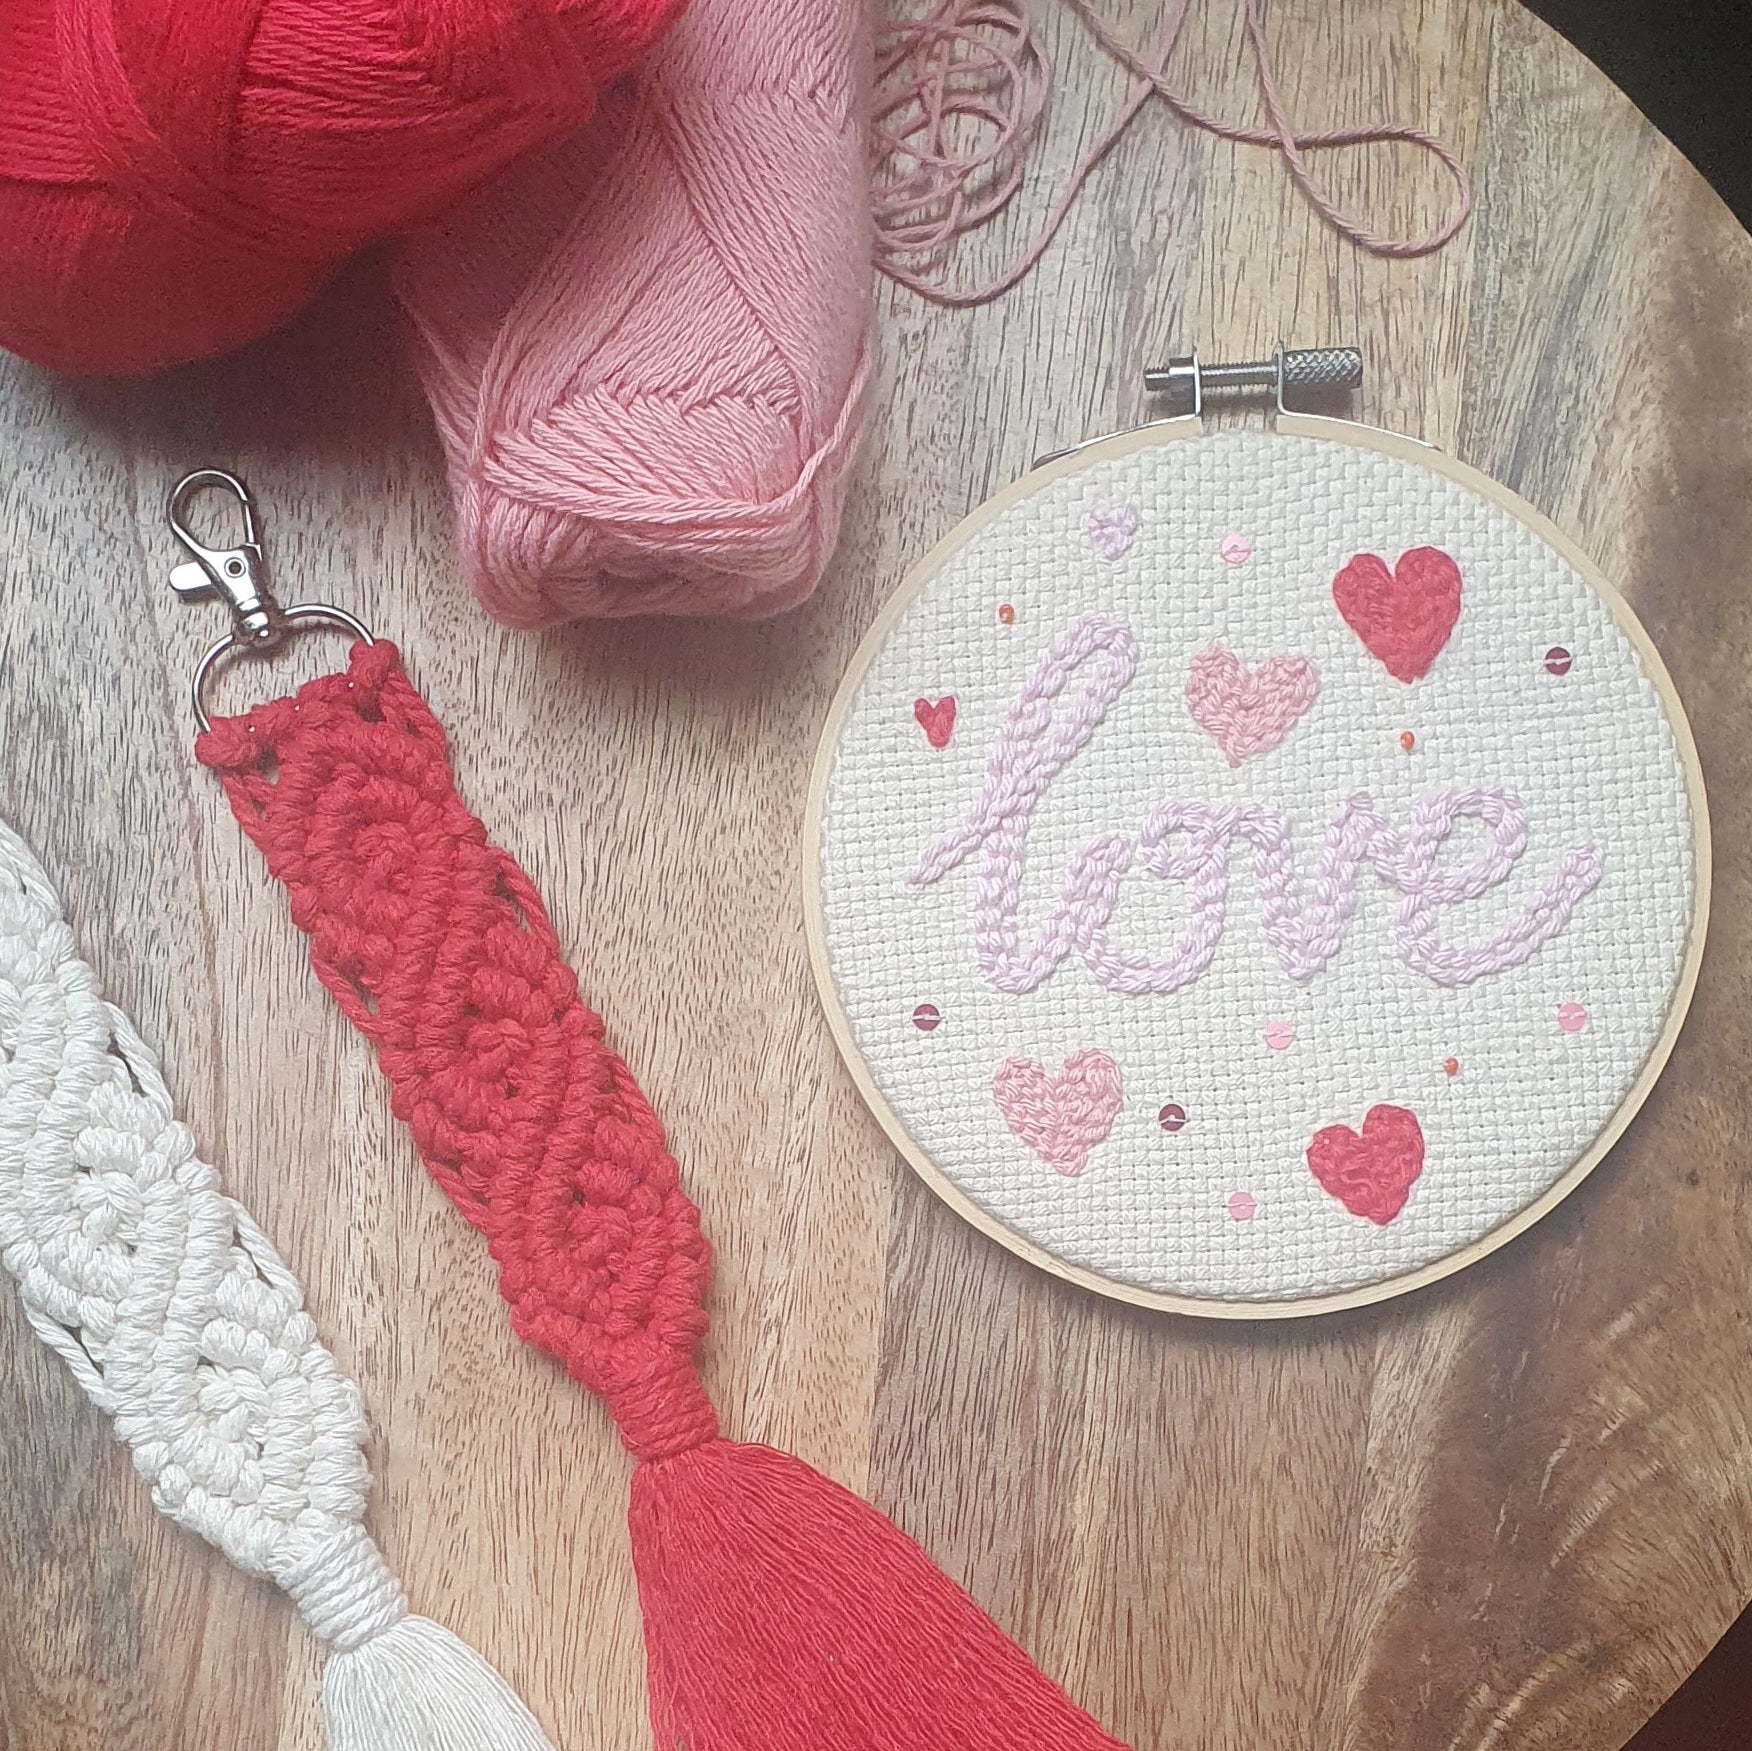 Punch needle embroidery hoop 